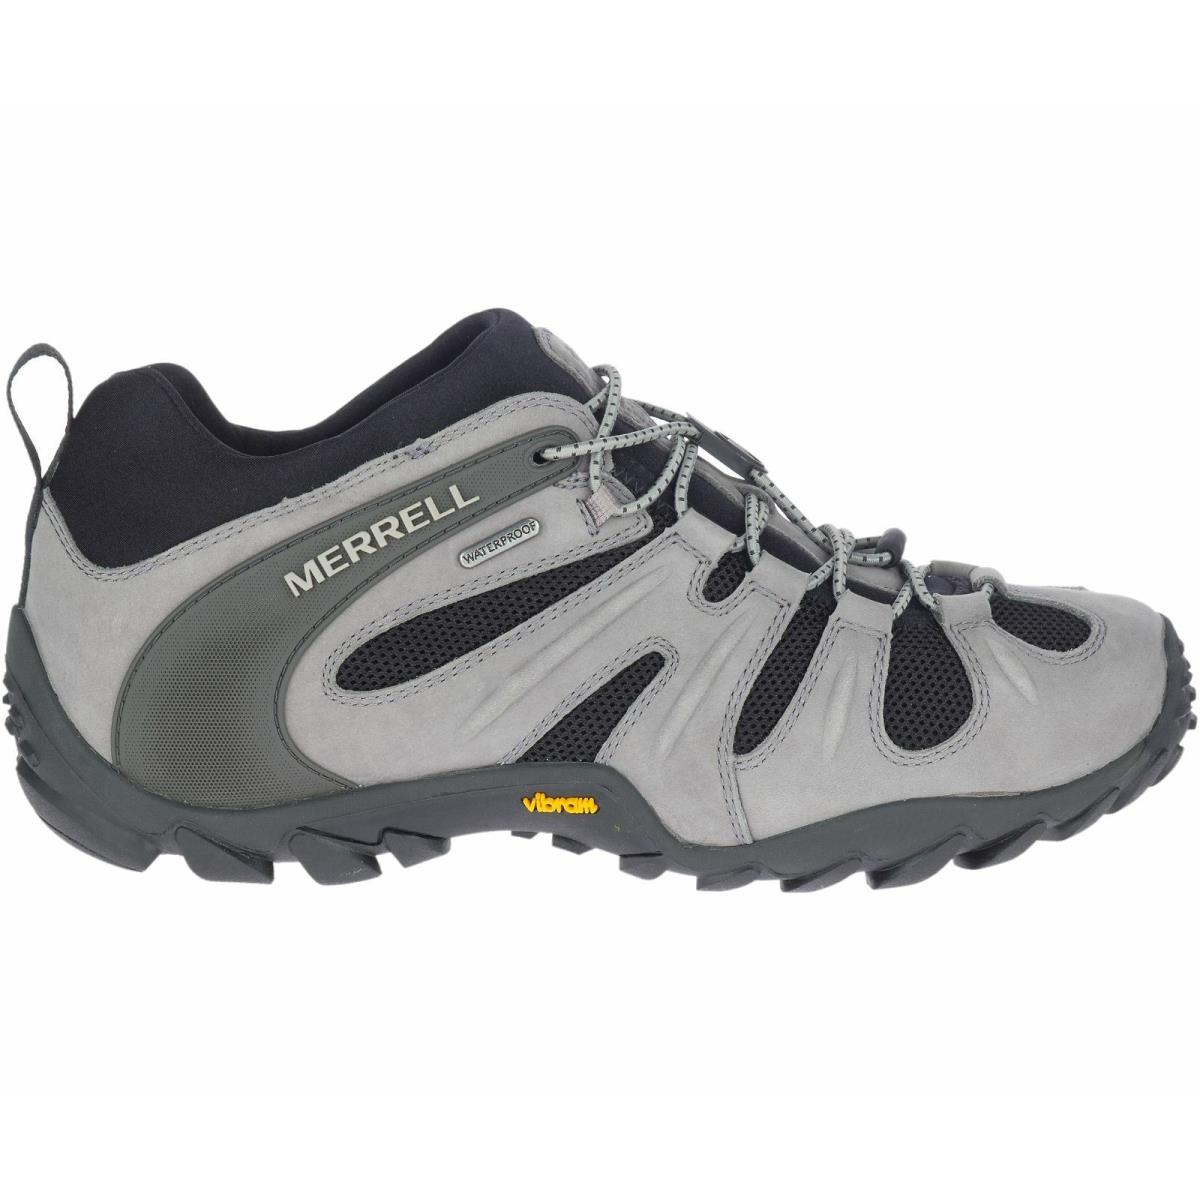 Merrell Men`s Waterproof Shock Absorbing Moisture Wicking Hiking Leather Shoes WATERPROOF Charcoal